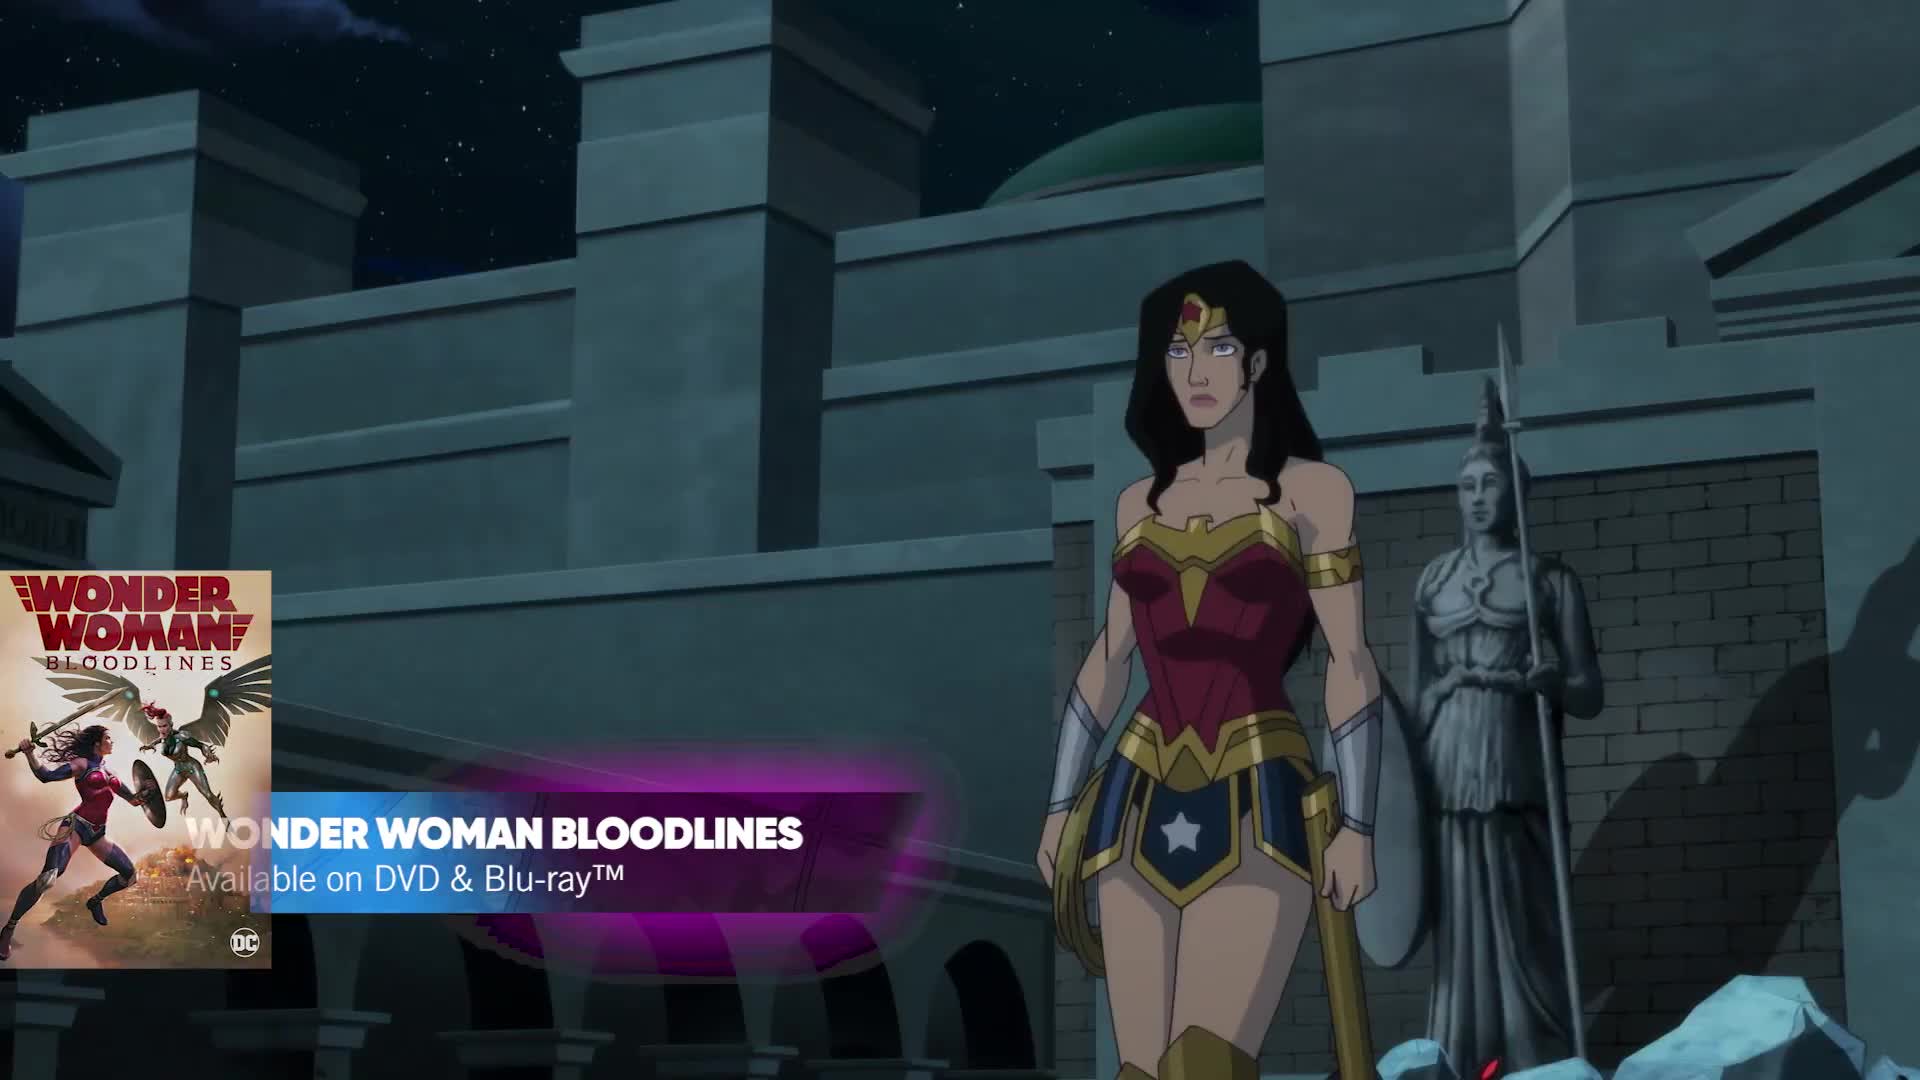 Wonder-Woman-Bloodlines-3 at Why So Blu?